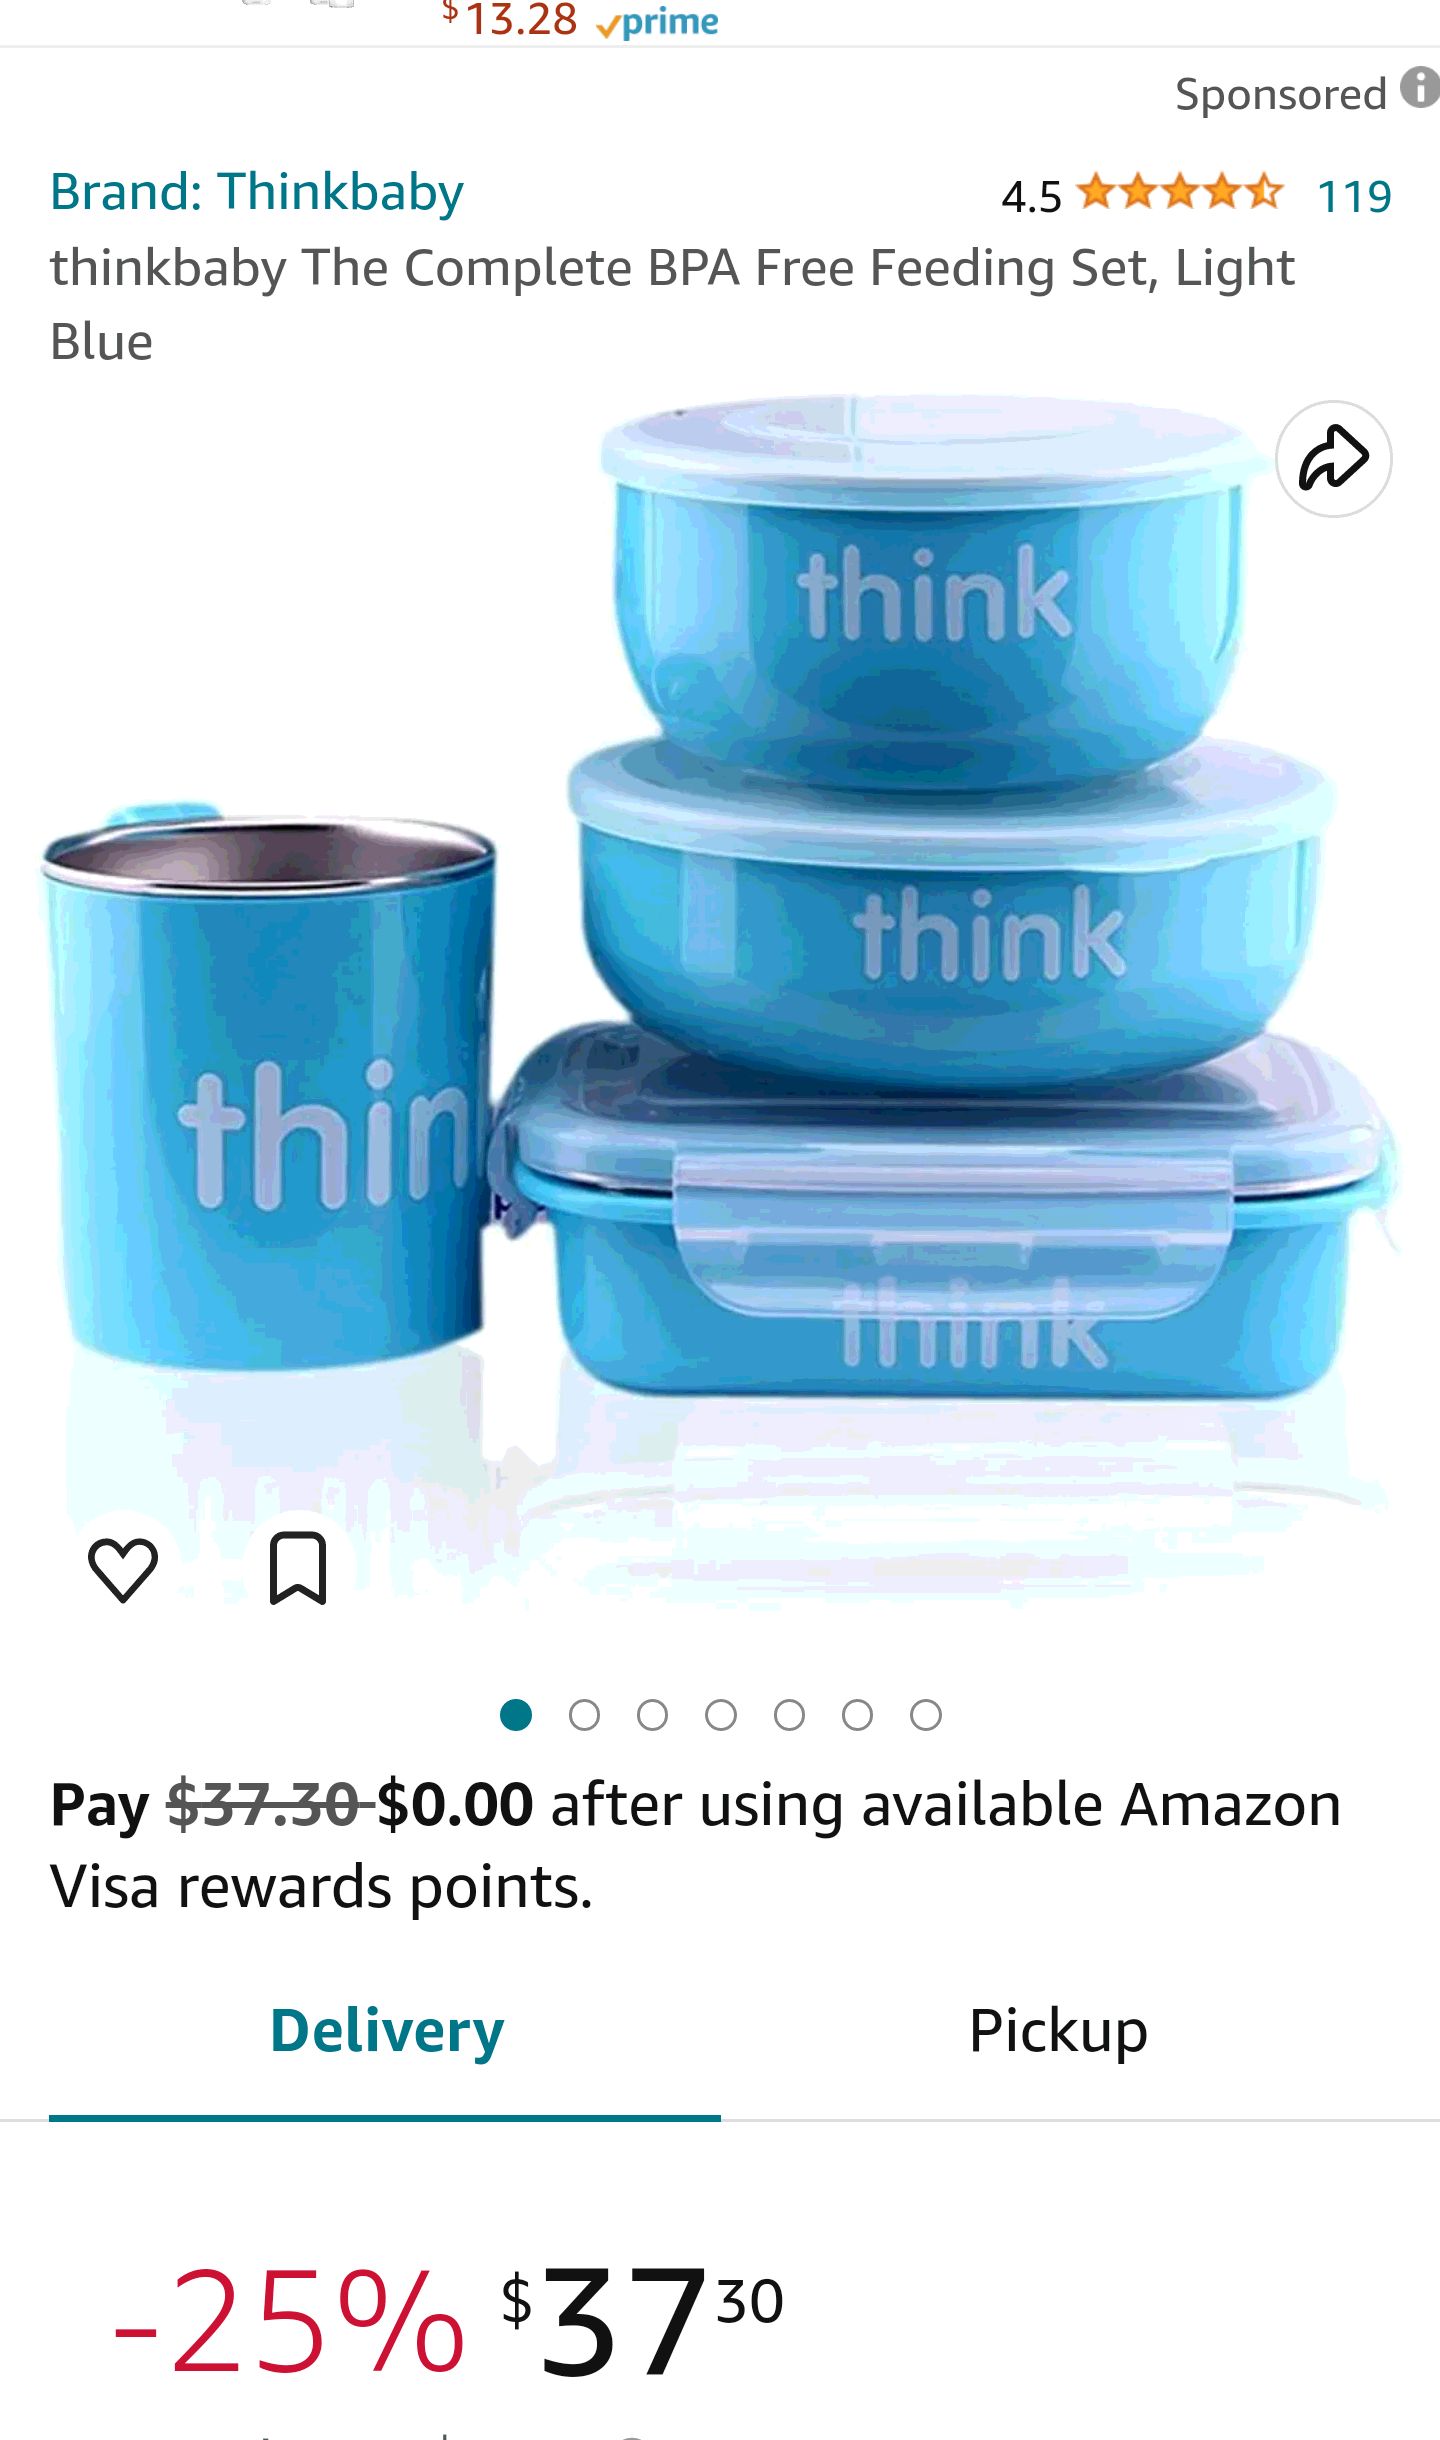 Amazon.com : thinkbaby The Complete BPA Free Feeding Set, Light Blue : Baby